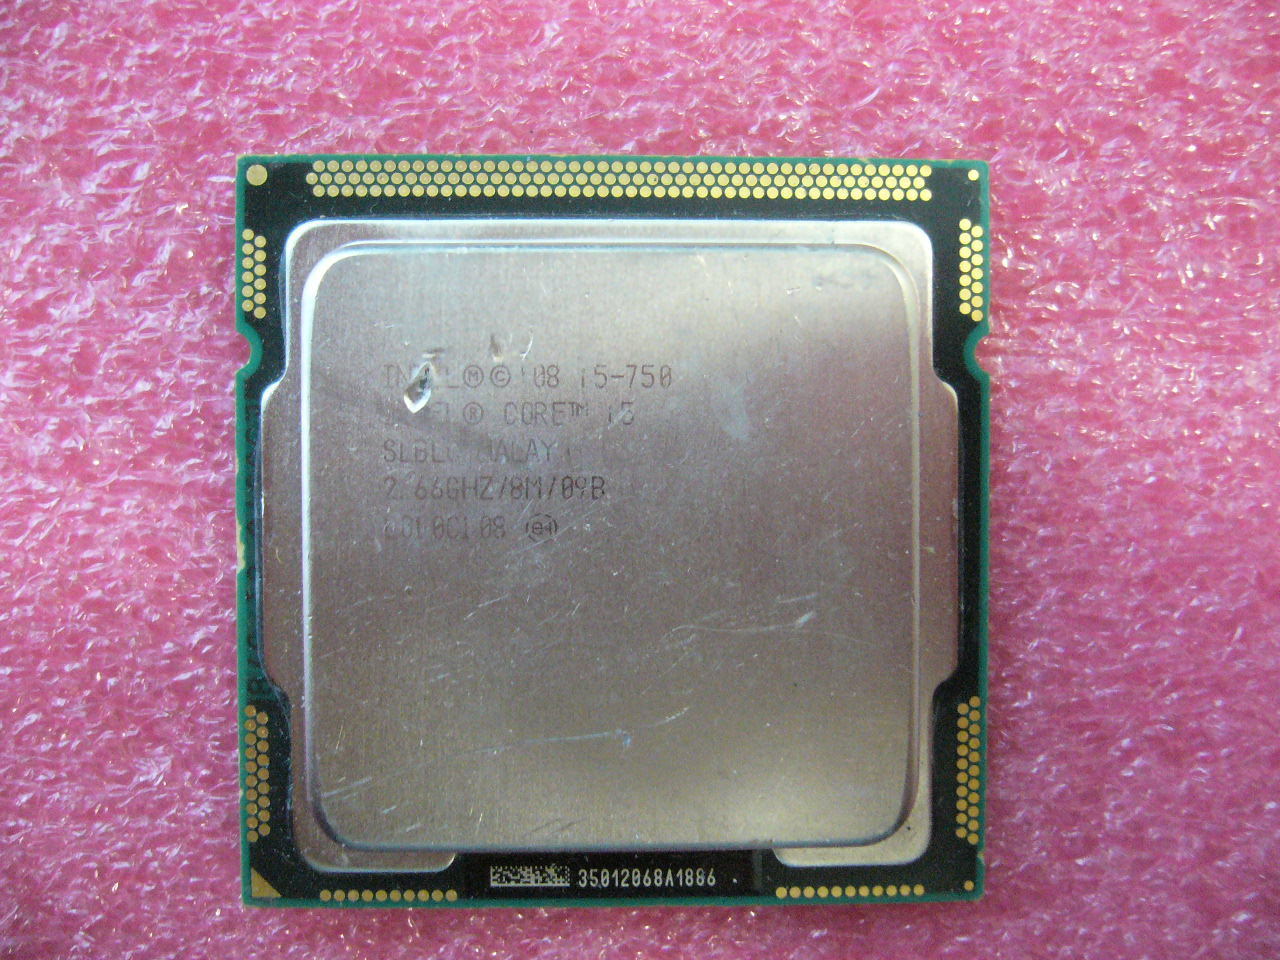 QTY 1x Intel CPU i5-750 Quad-Cores 2.66Ghz/8MB LGA1156 SLBLC